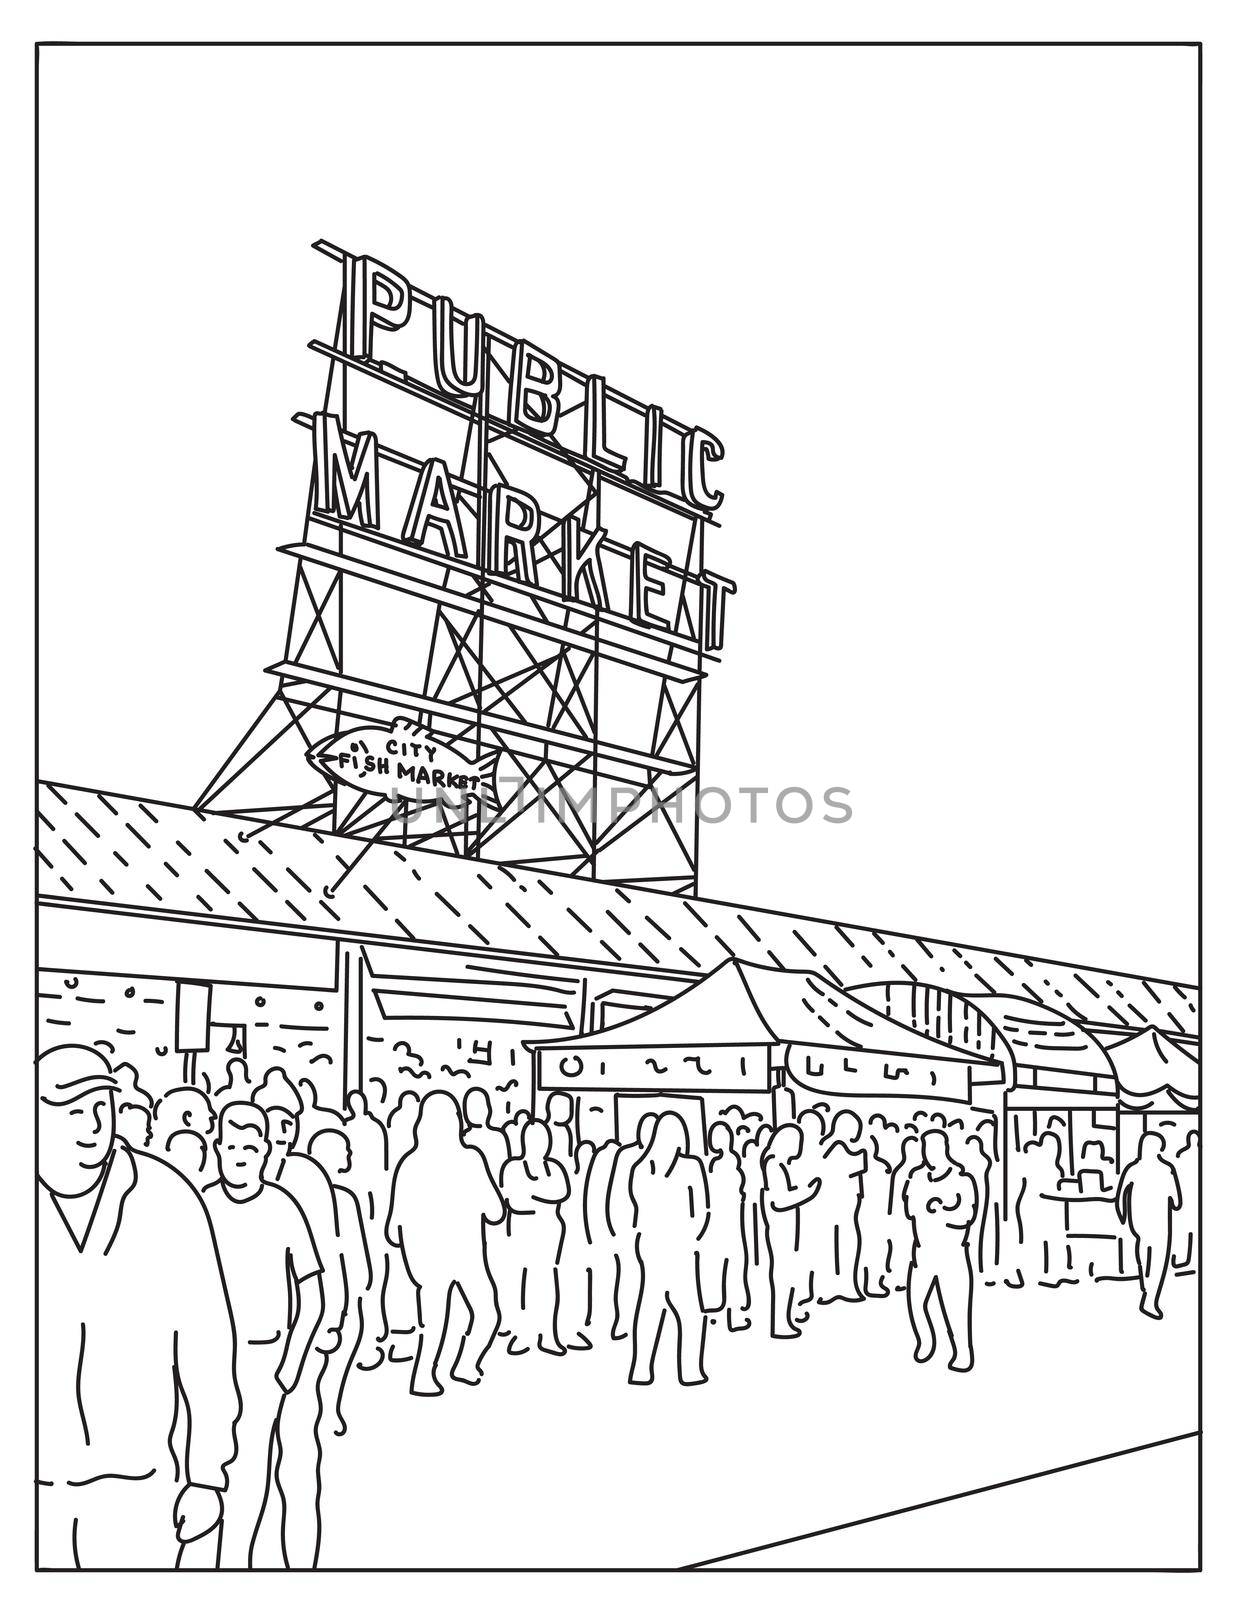 Pike Place Market a Public Market in Seattle, Washington United States Mono Line or Monoline Black and White Line Art by patrimonio